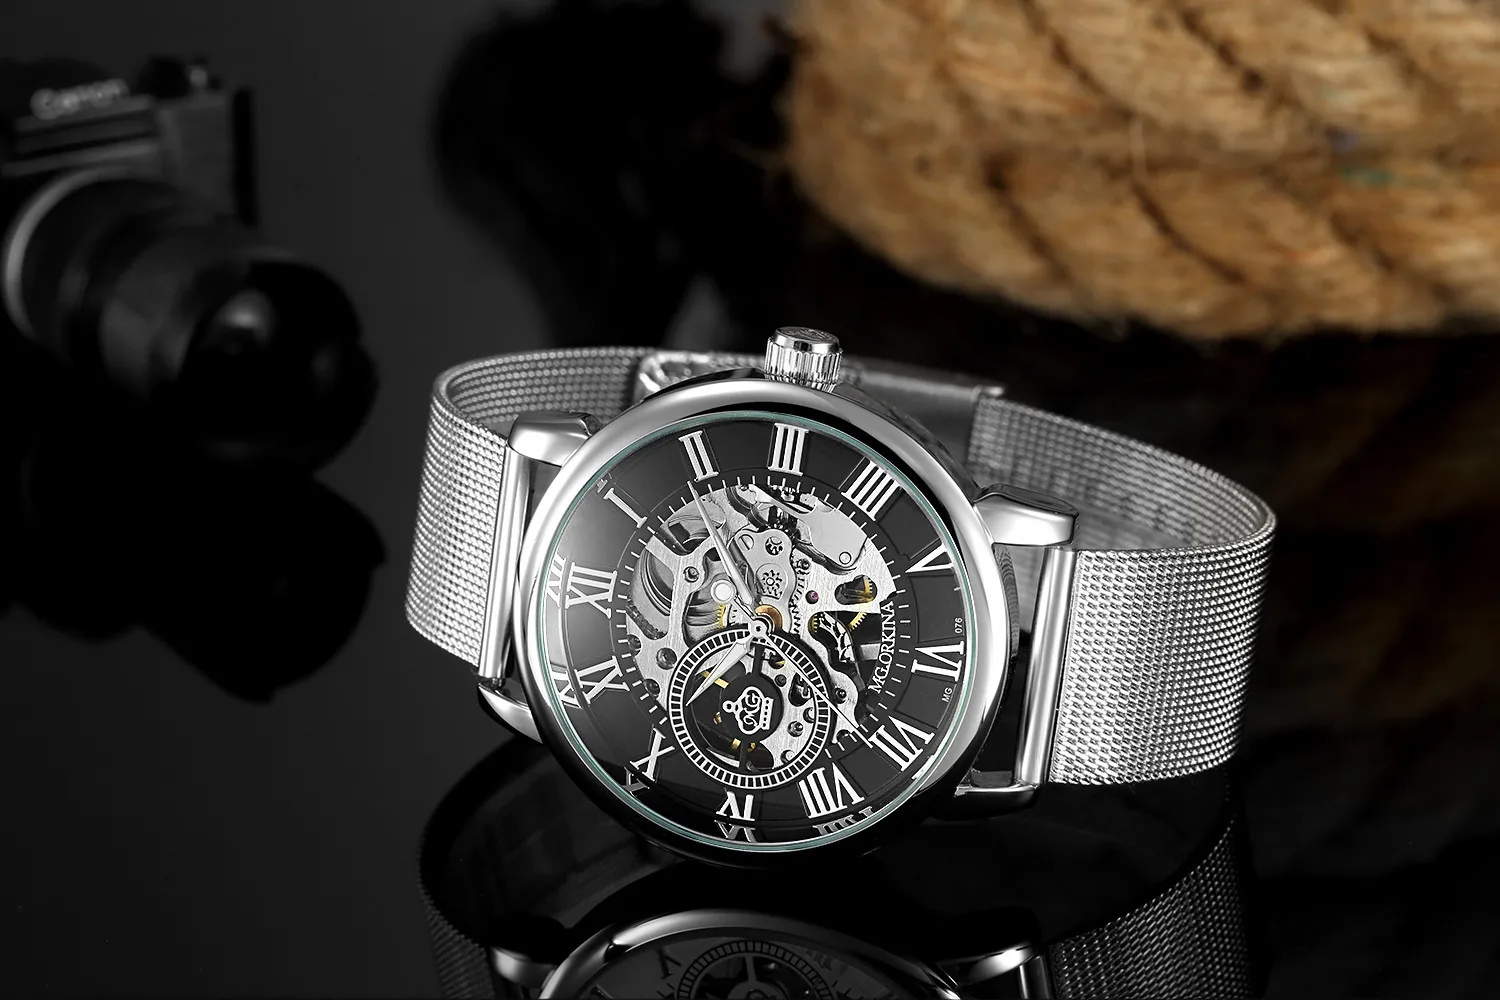 MG.ORKINA new men's popular brand watch| Alibaba.com